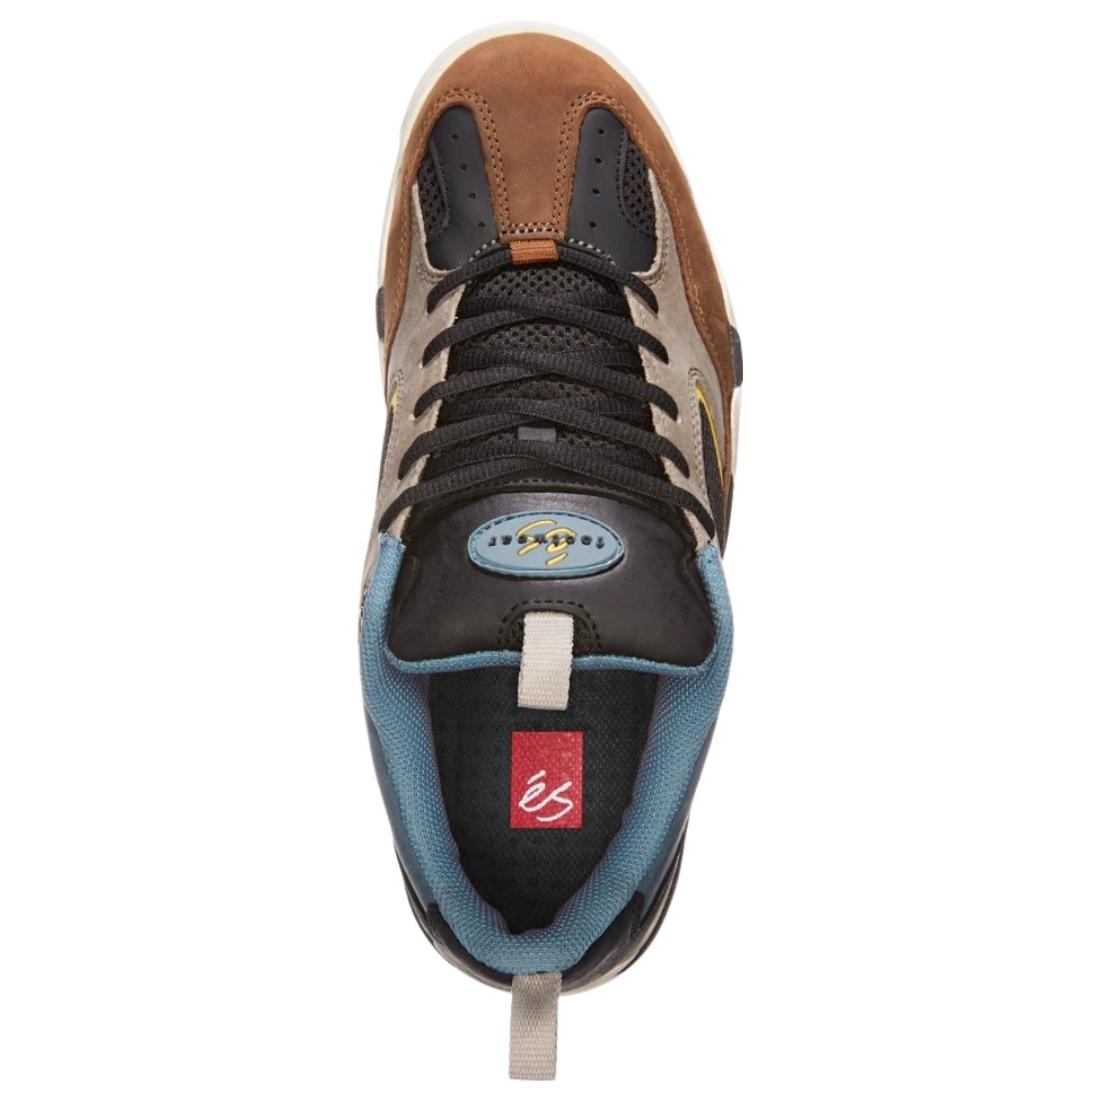 Es Quattro Plus Skate Shoes - Brown/Tan/Blue - Mens Skate Shoes by eS